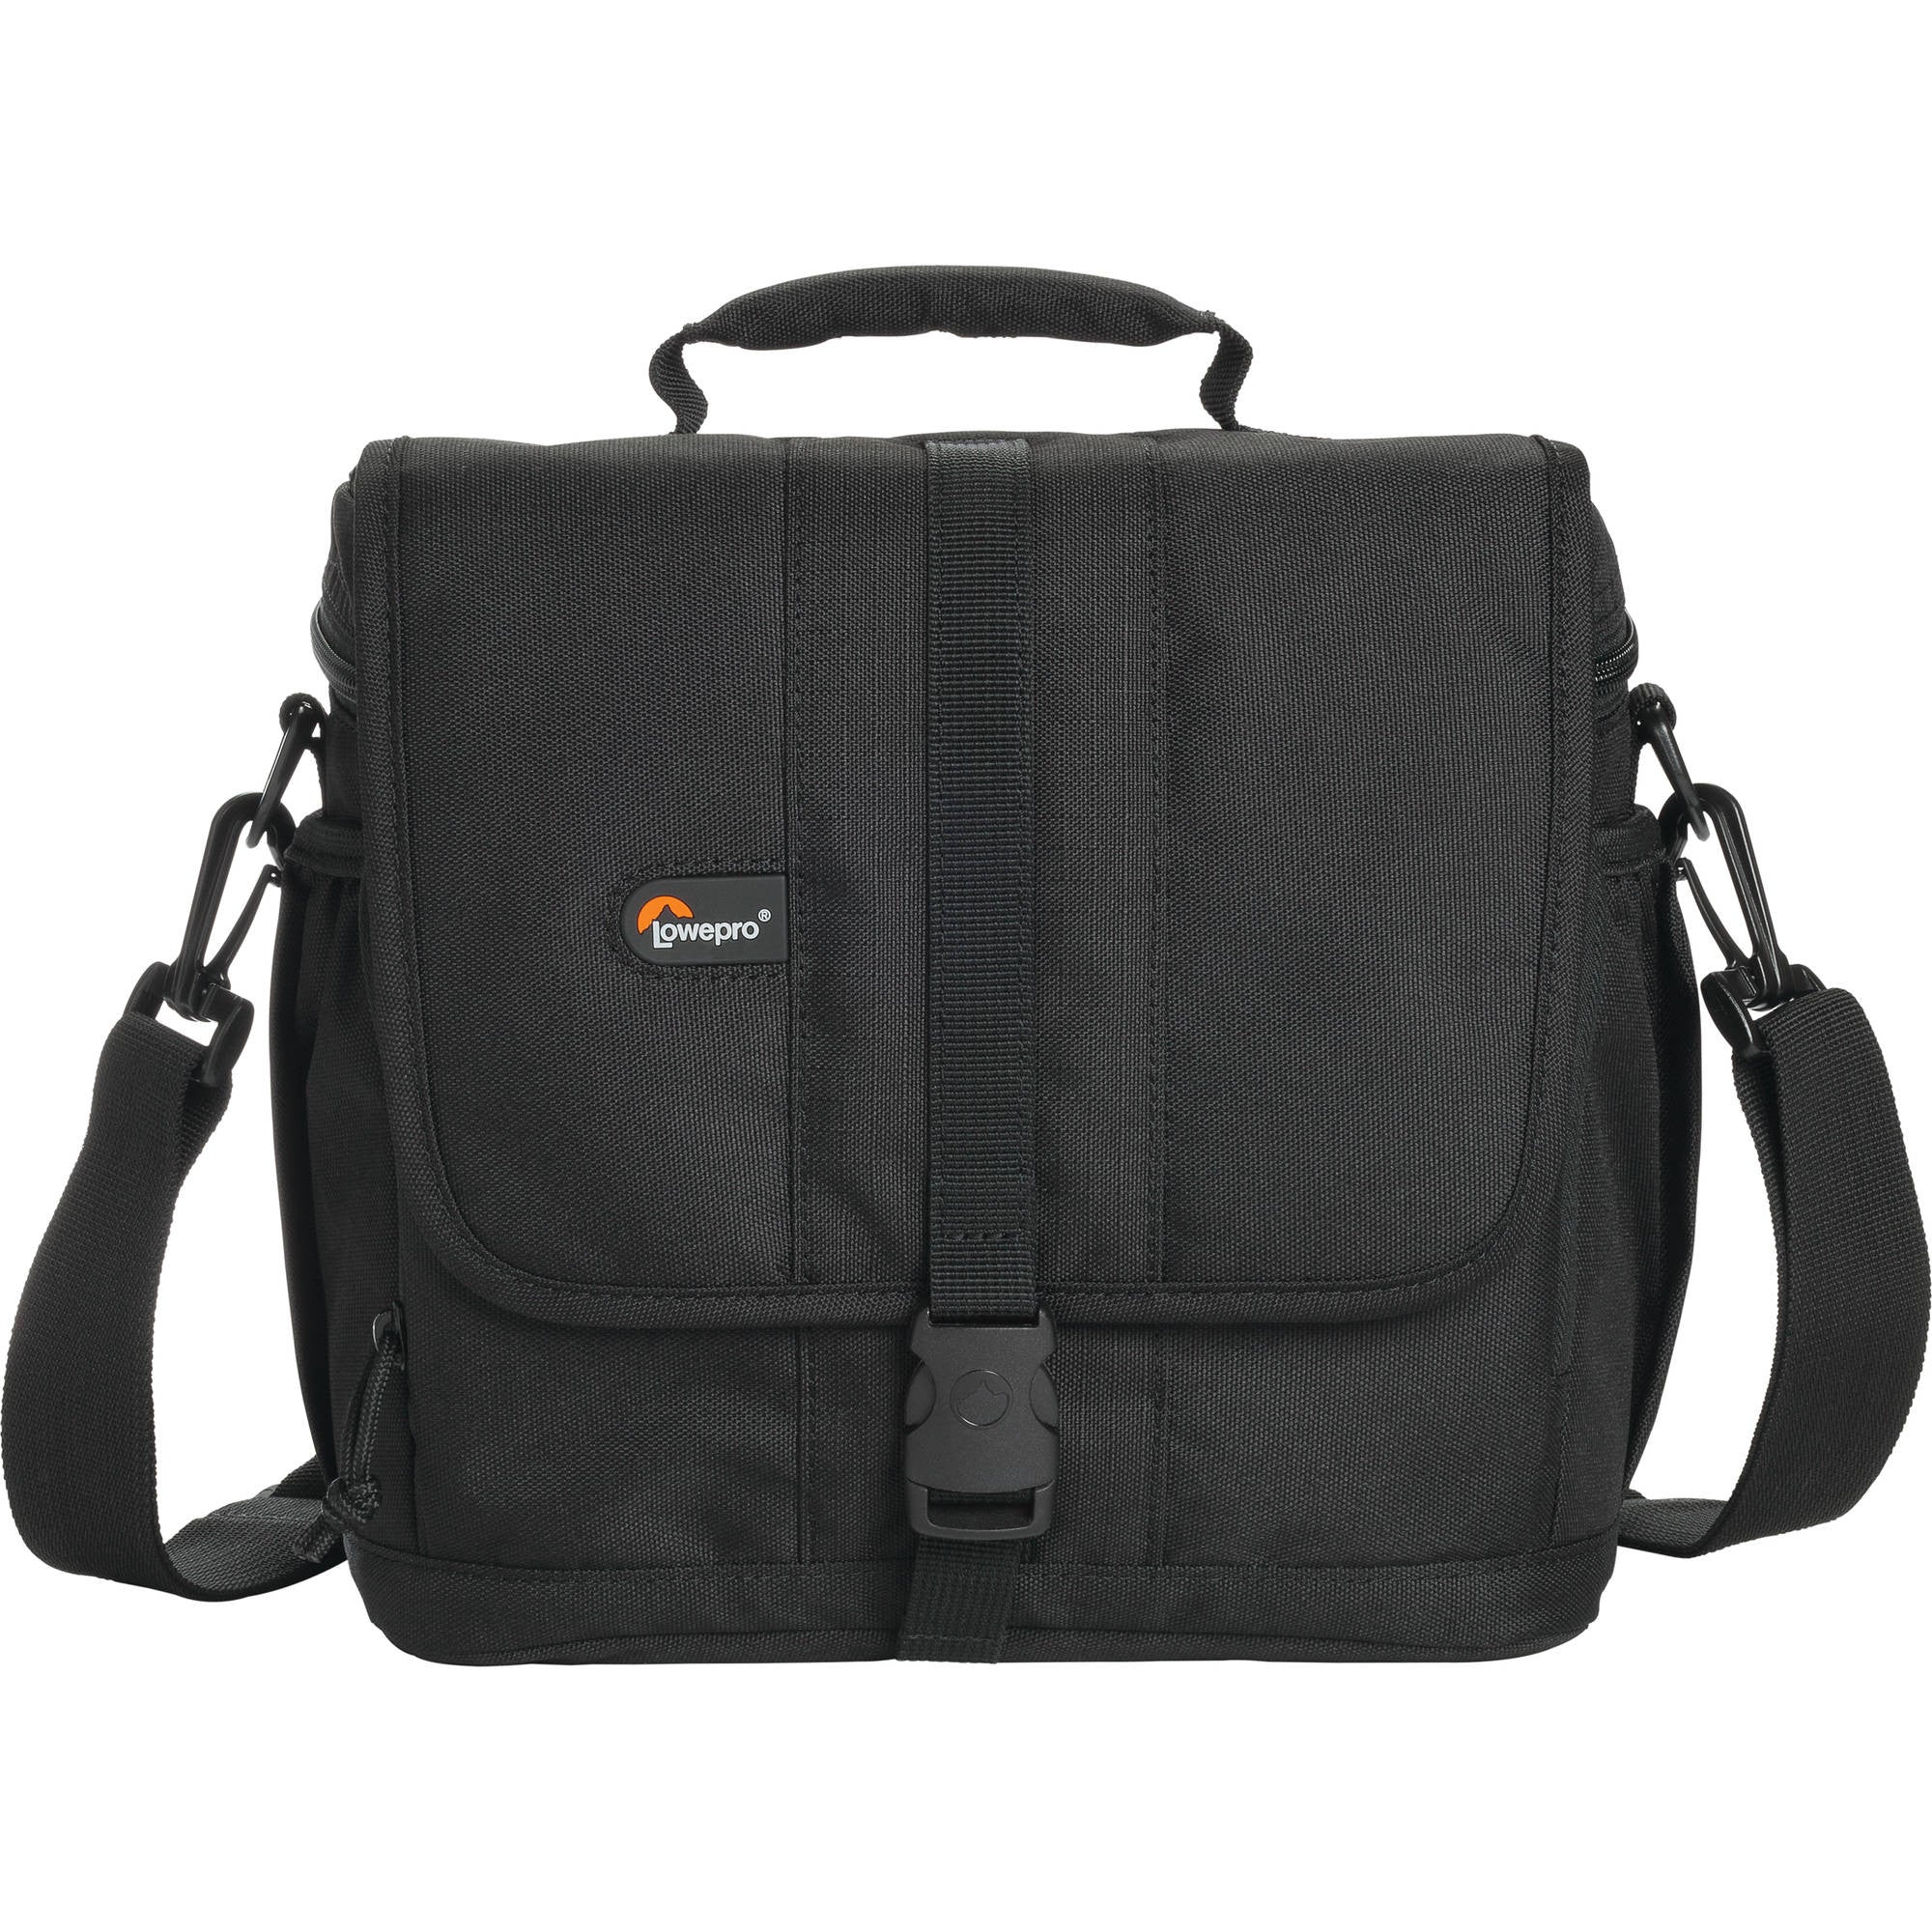 Lowepro Adventura 170 (Black), bags shoulder bags, Lowepro - Pictureline  - 1